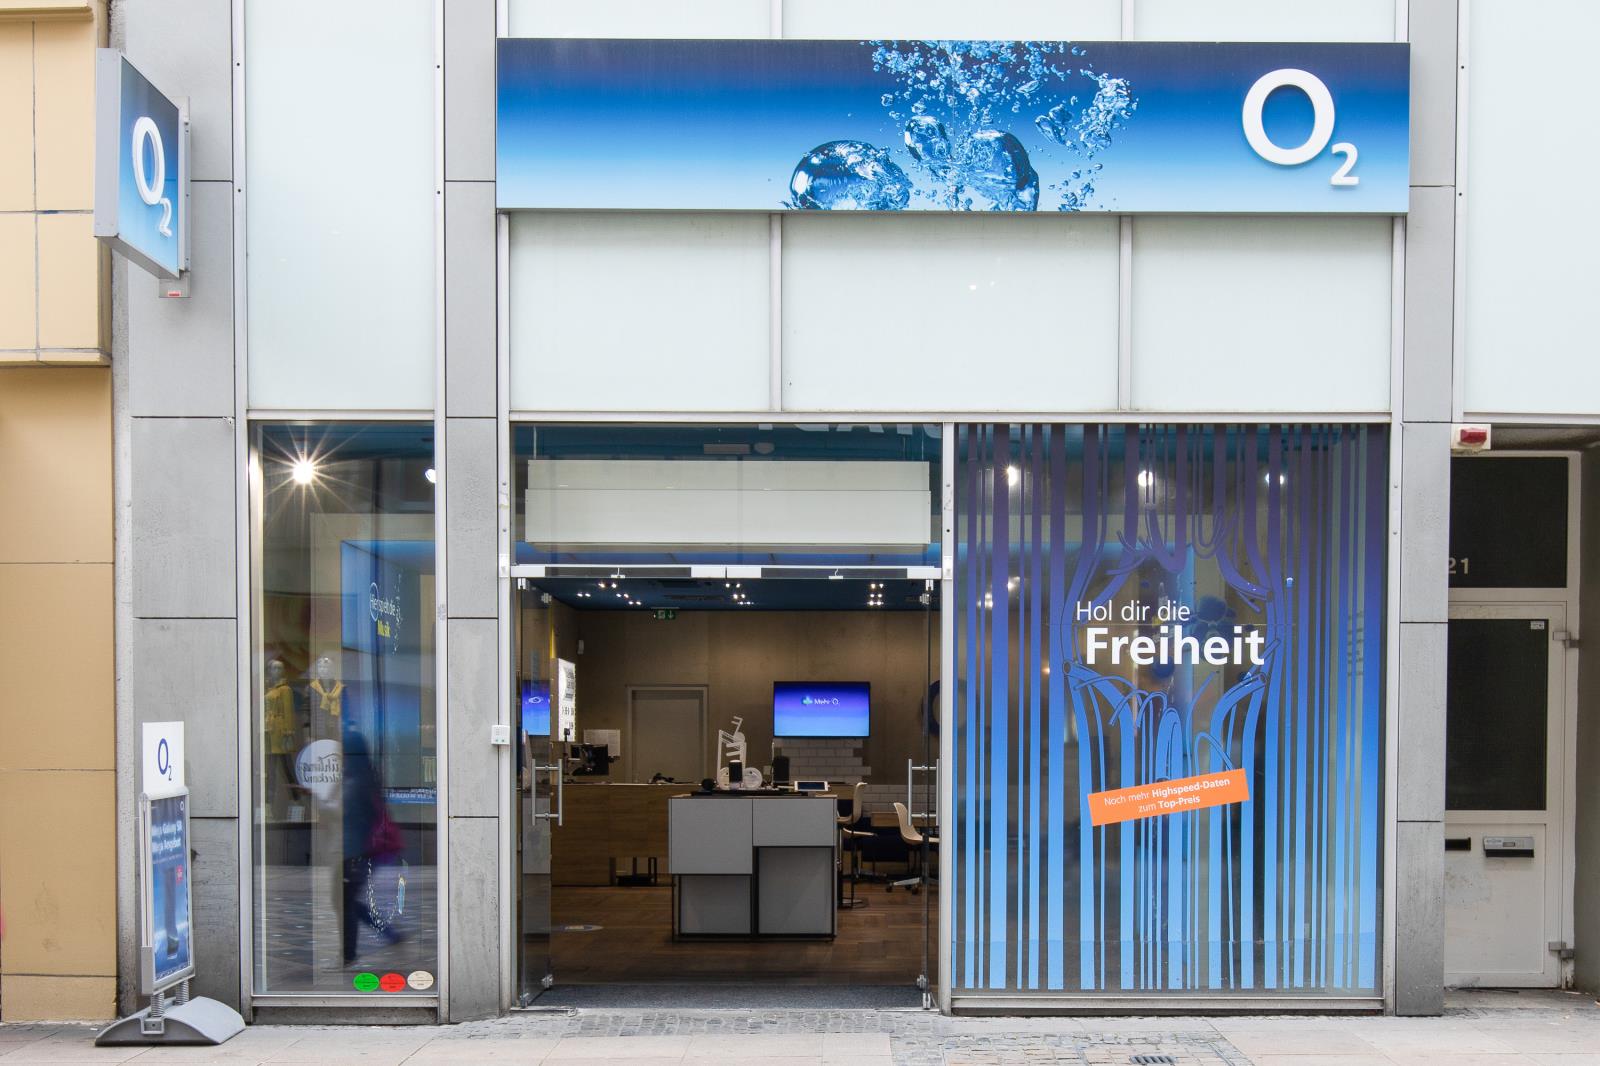 o2 Shop, Westenhellweg 21 in Dortmund